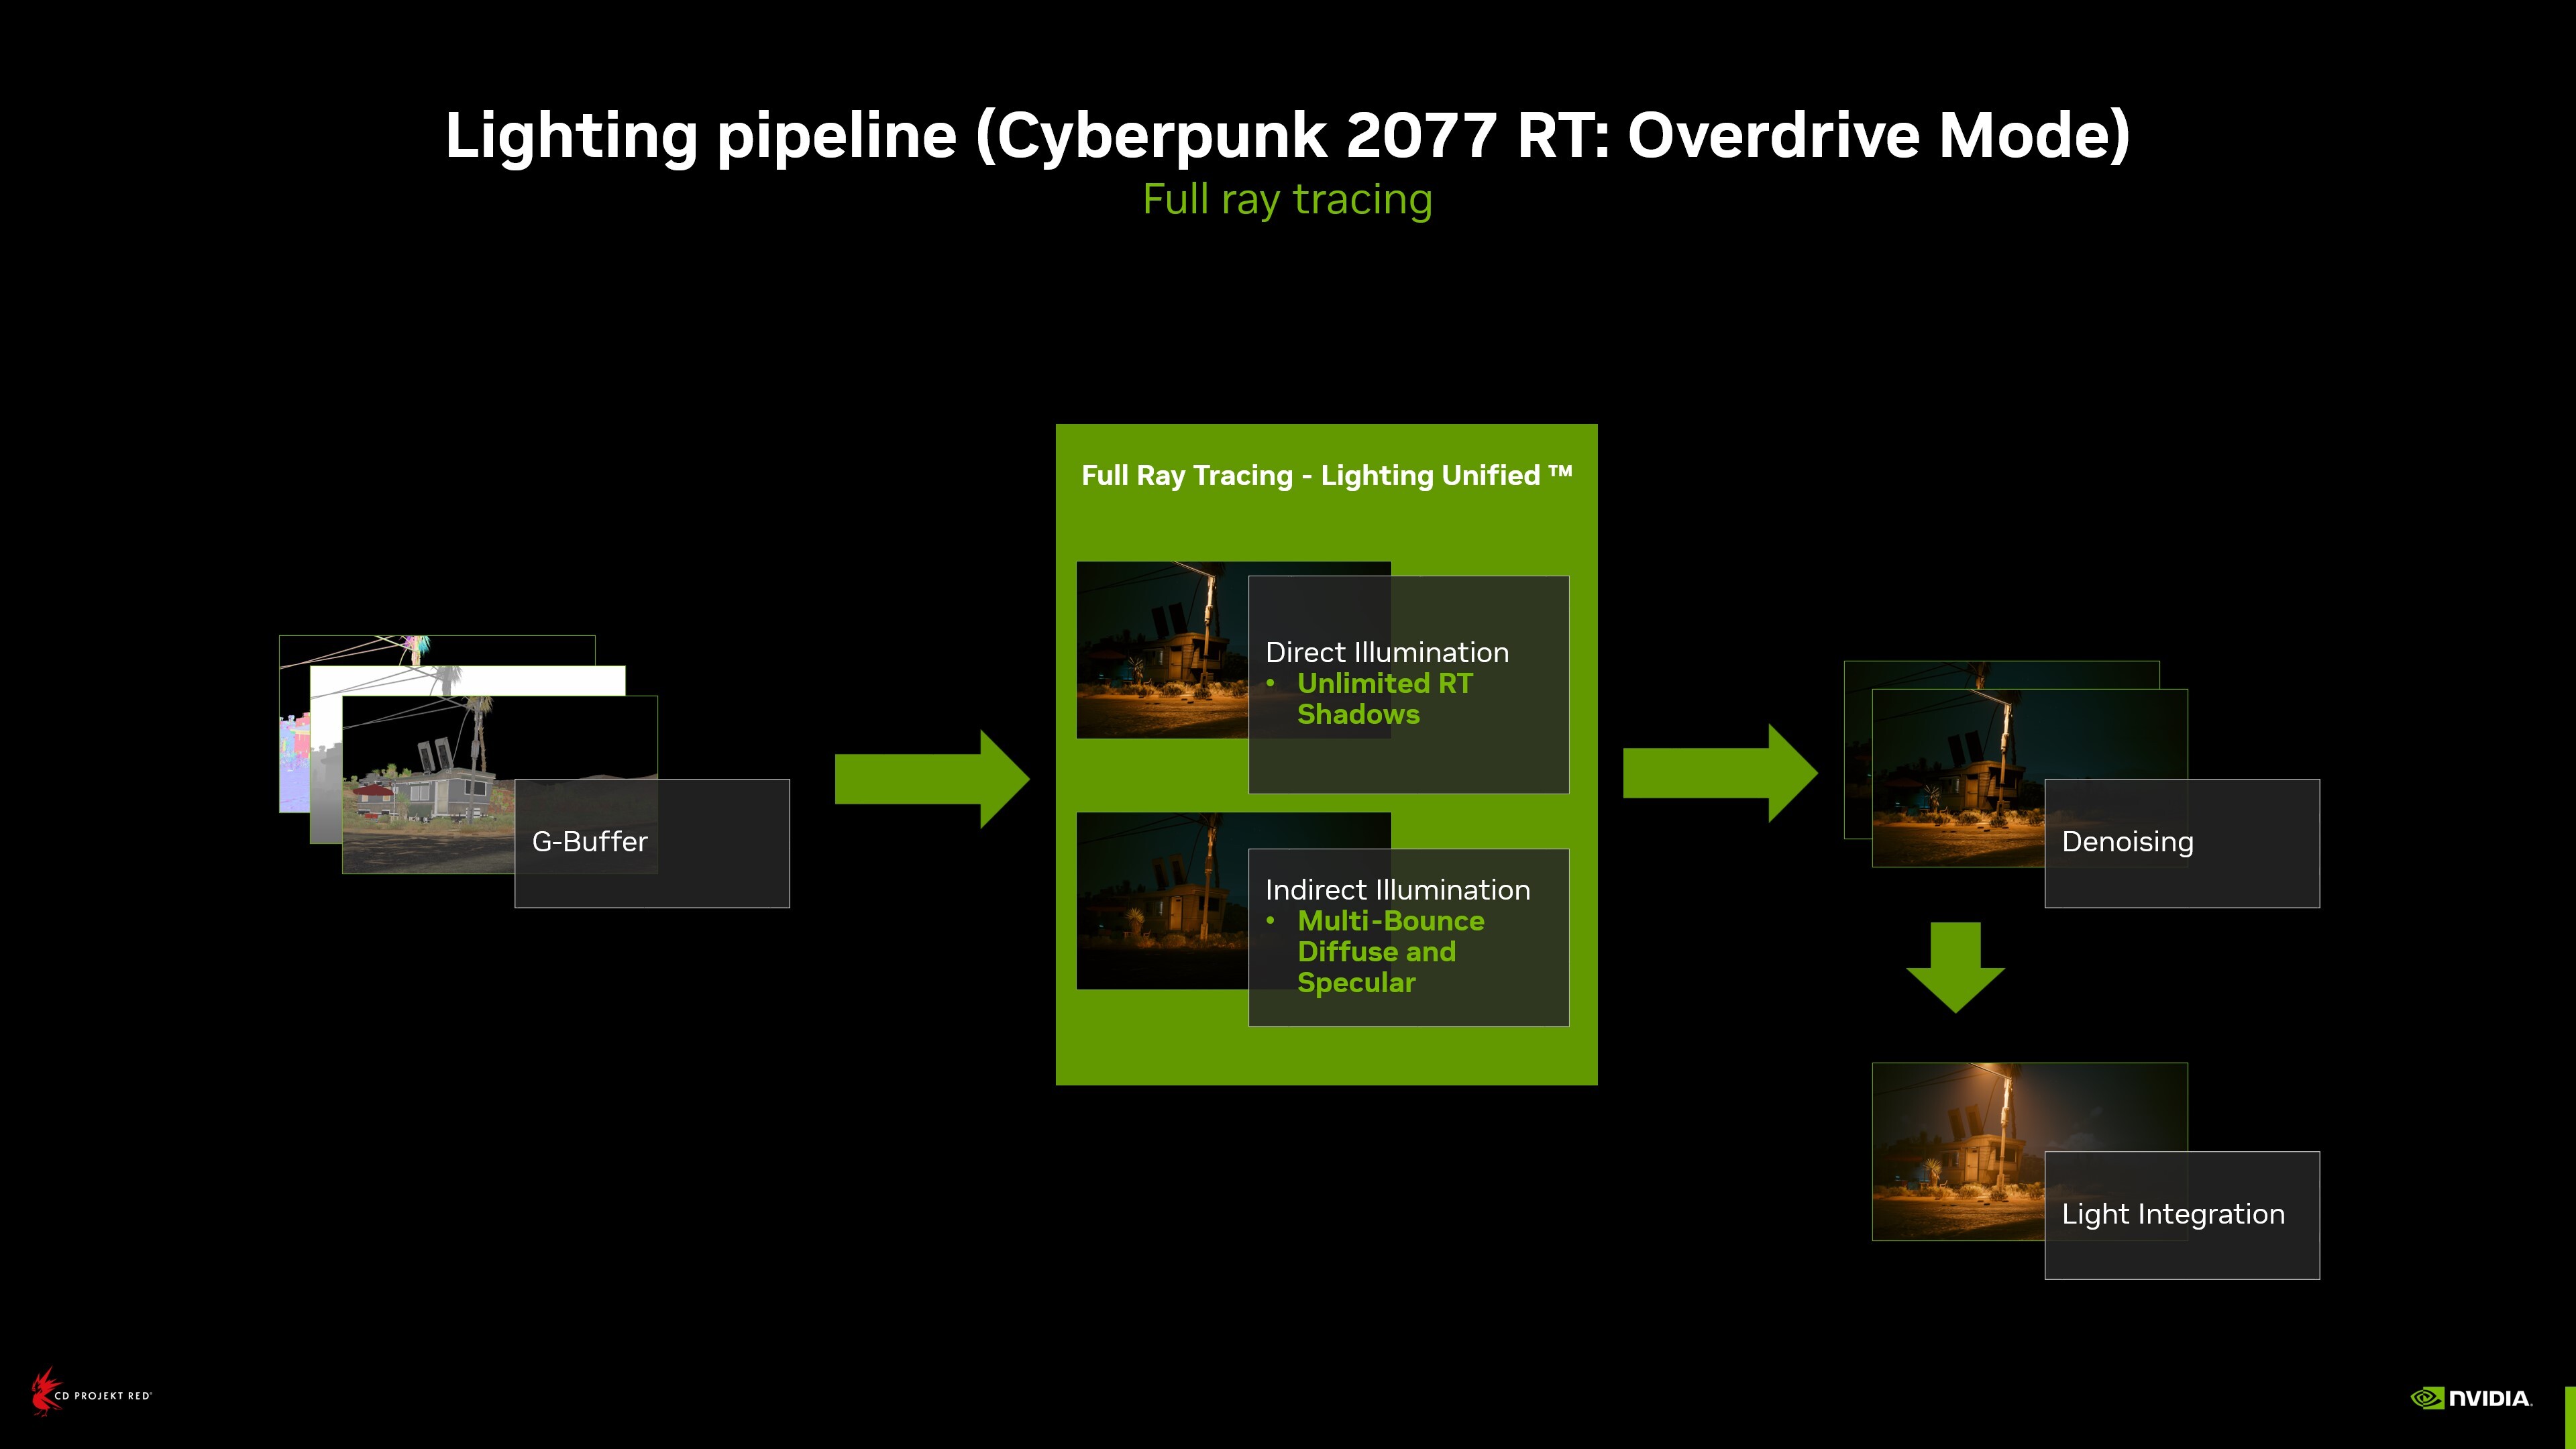 Cyberpunk 2077 RayTracing vs. Overdrive